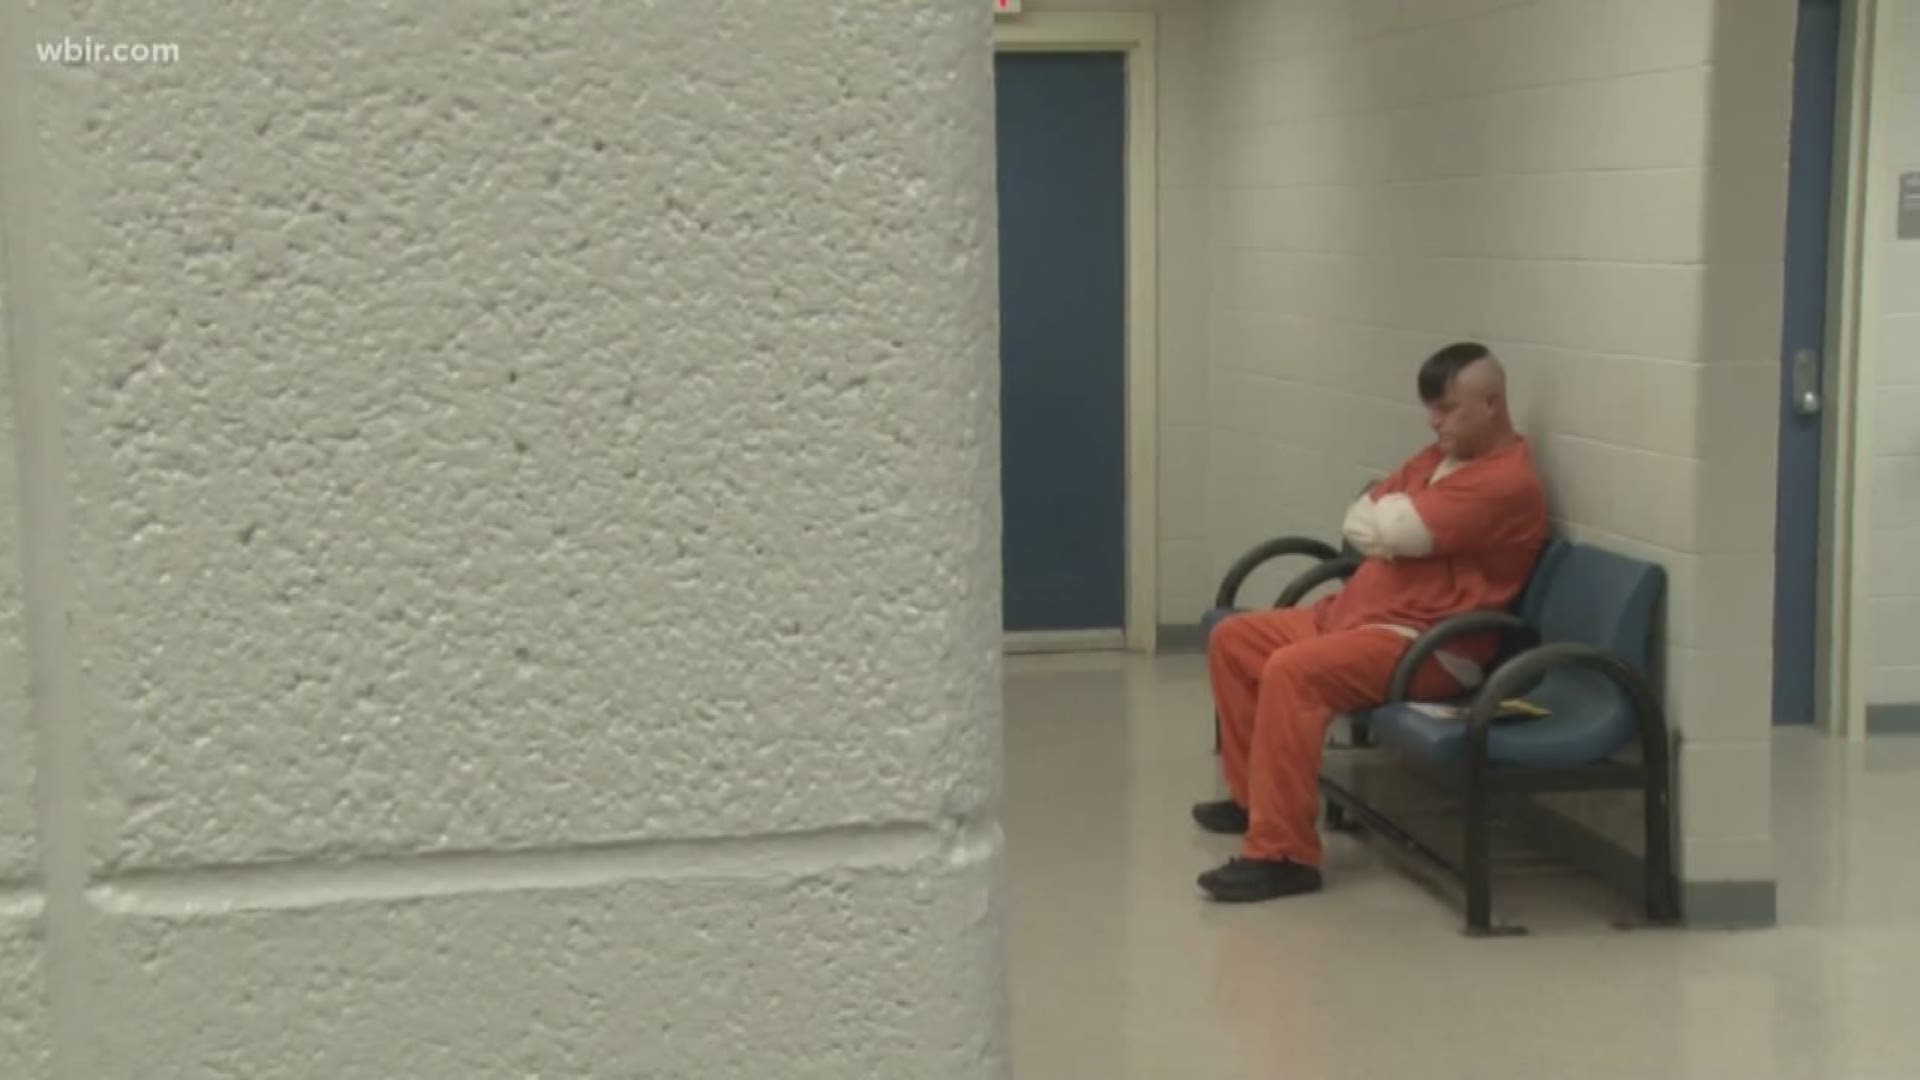 10News reporter Marc Sallinger went inside the jail for a closer look at the program's effectivness.